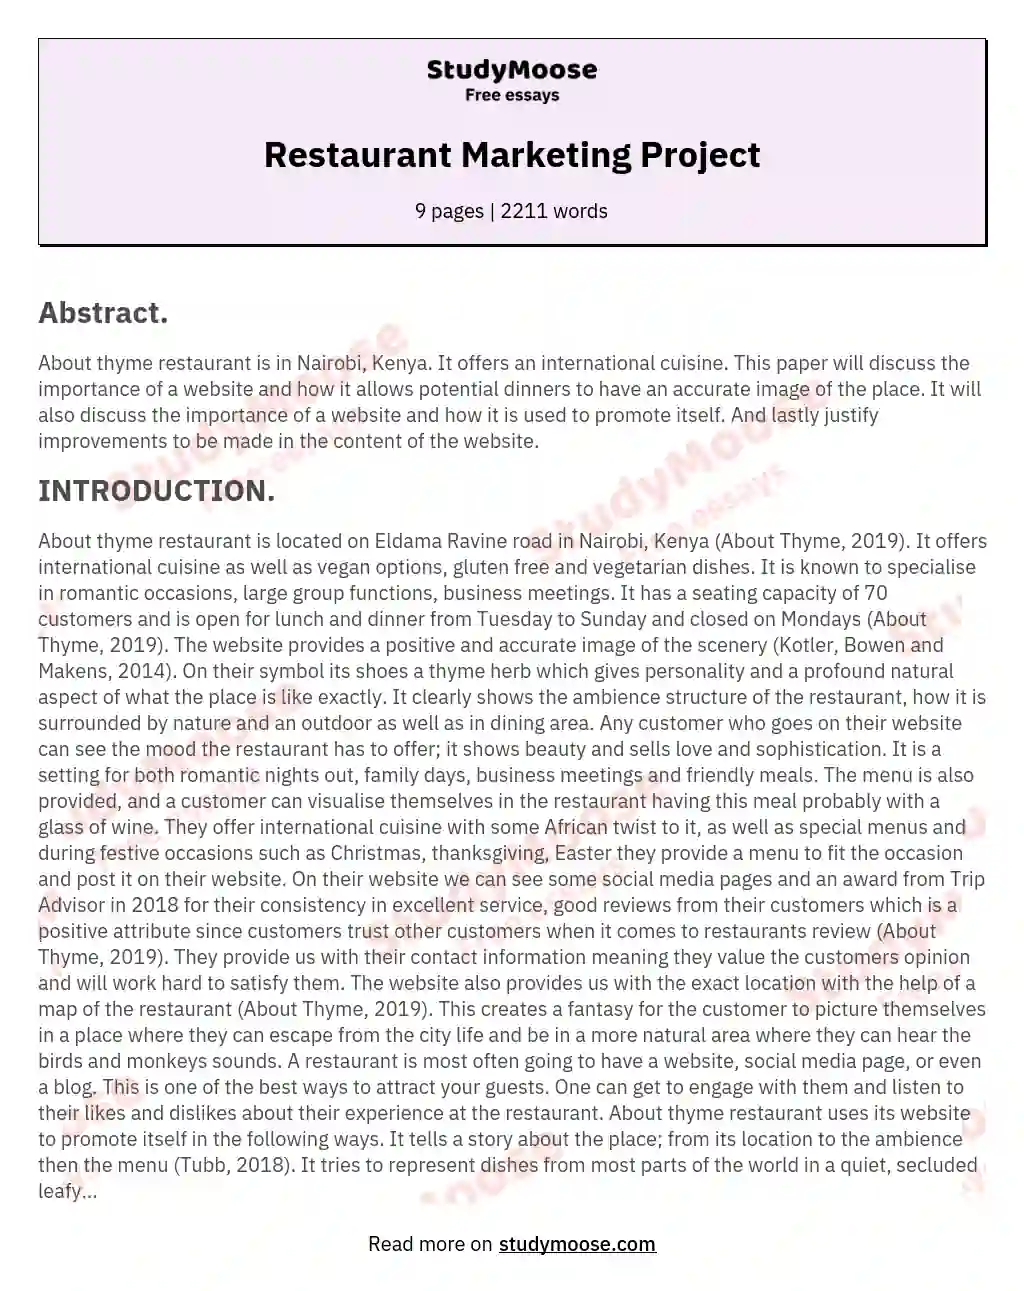 Restaurant Marketing Project essay